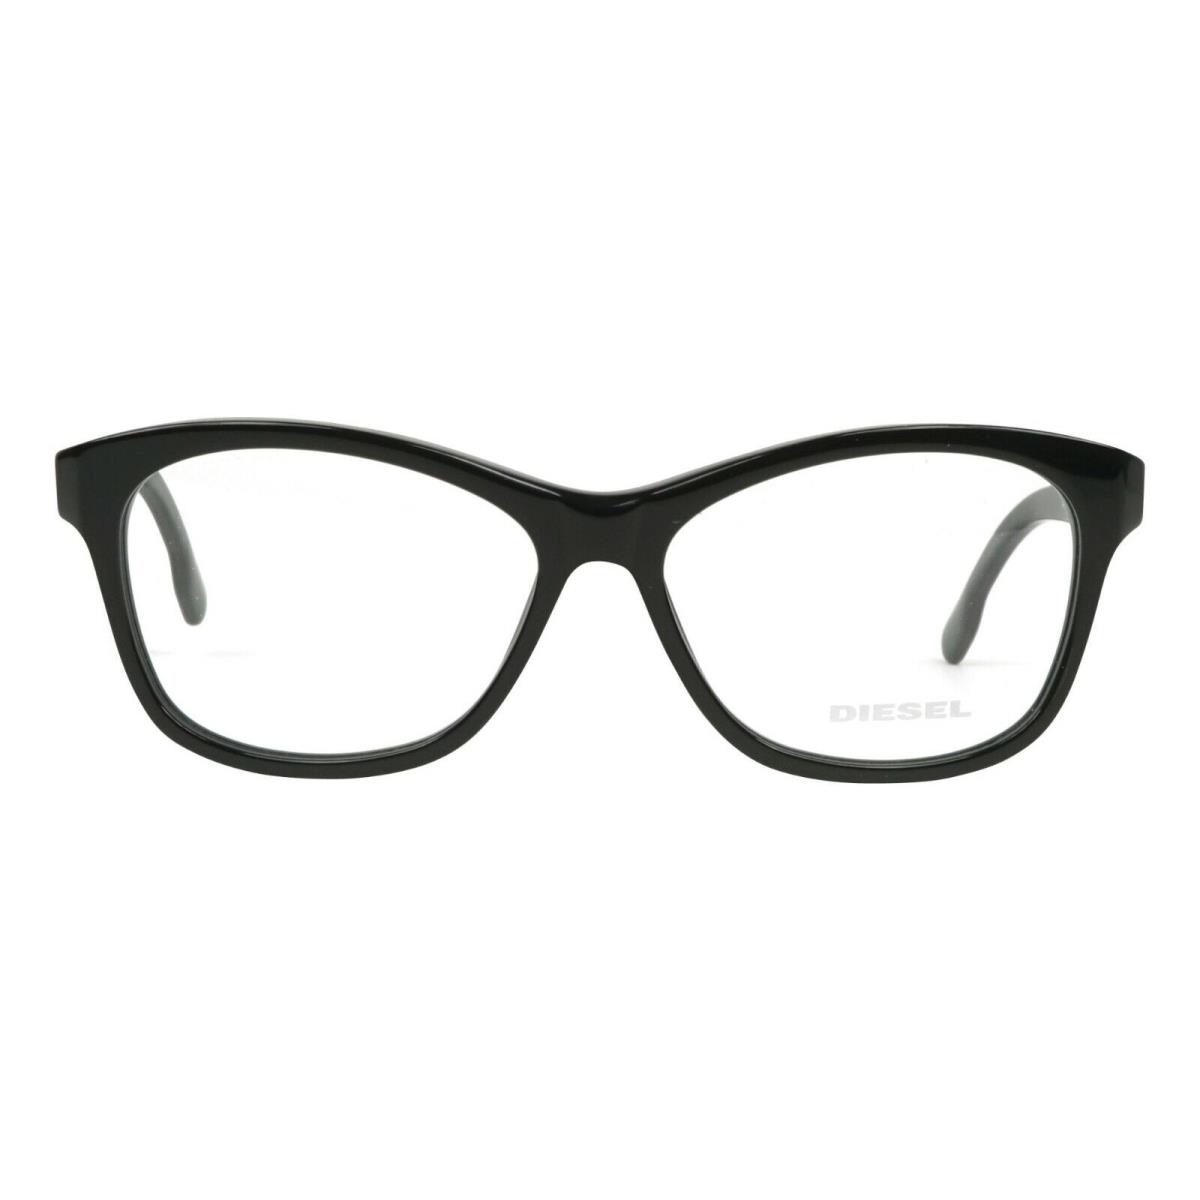 Diesel DL5085 001 Shiny Black Plastic Eyeglasses Frame 54-14-140 RX